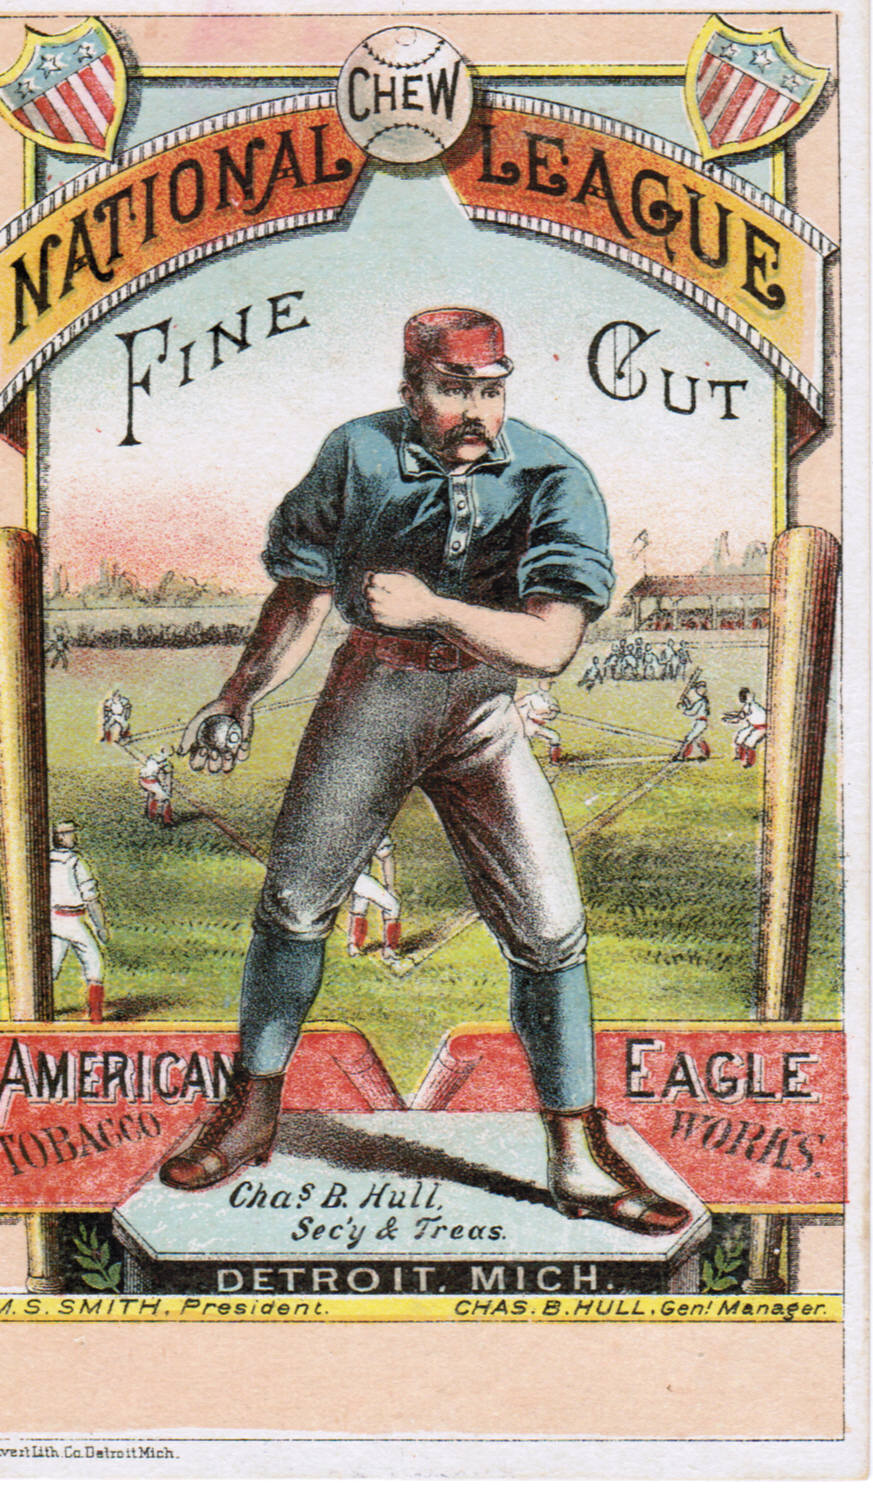 National Chew League baseball advertising trade card